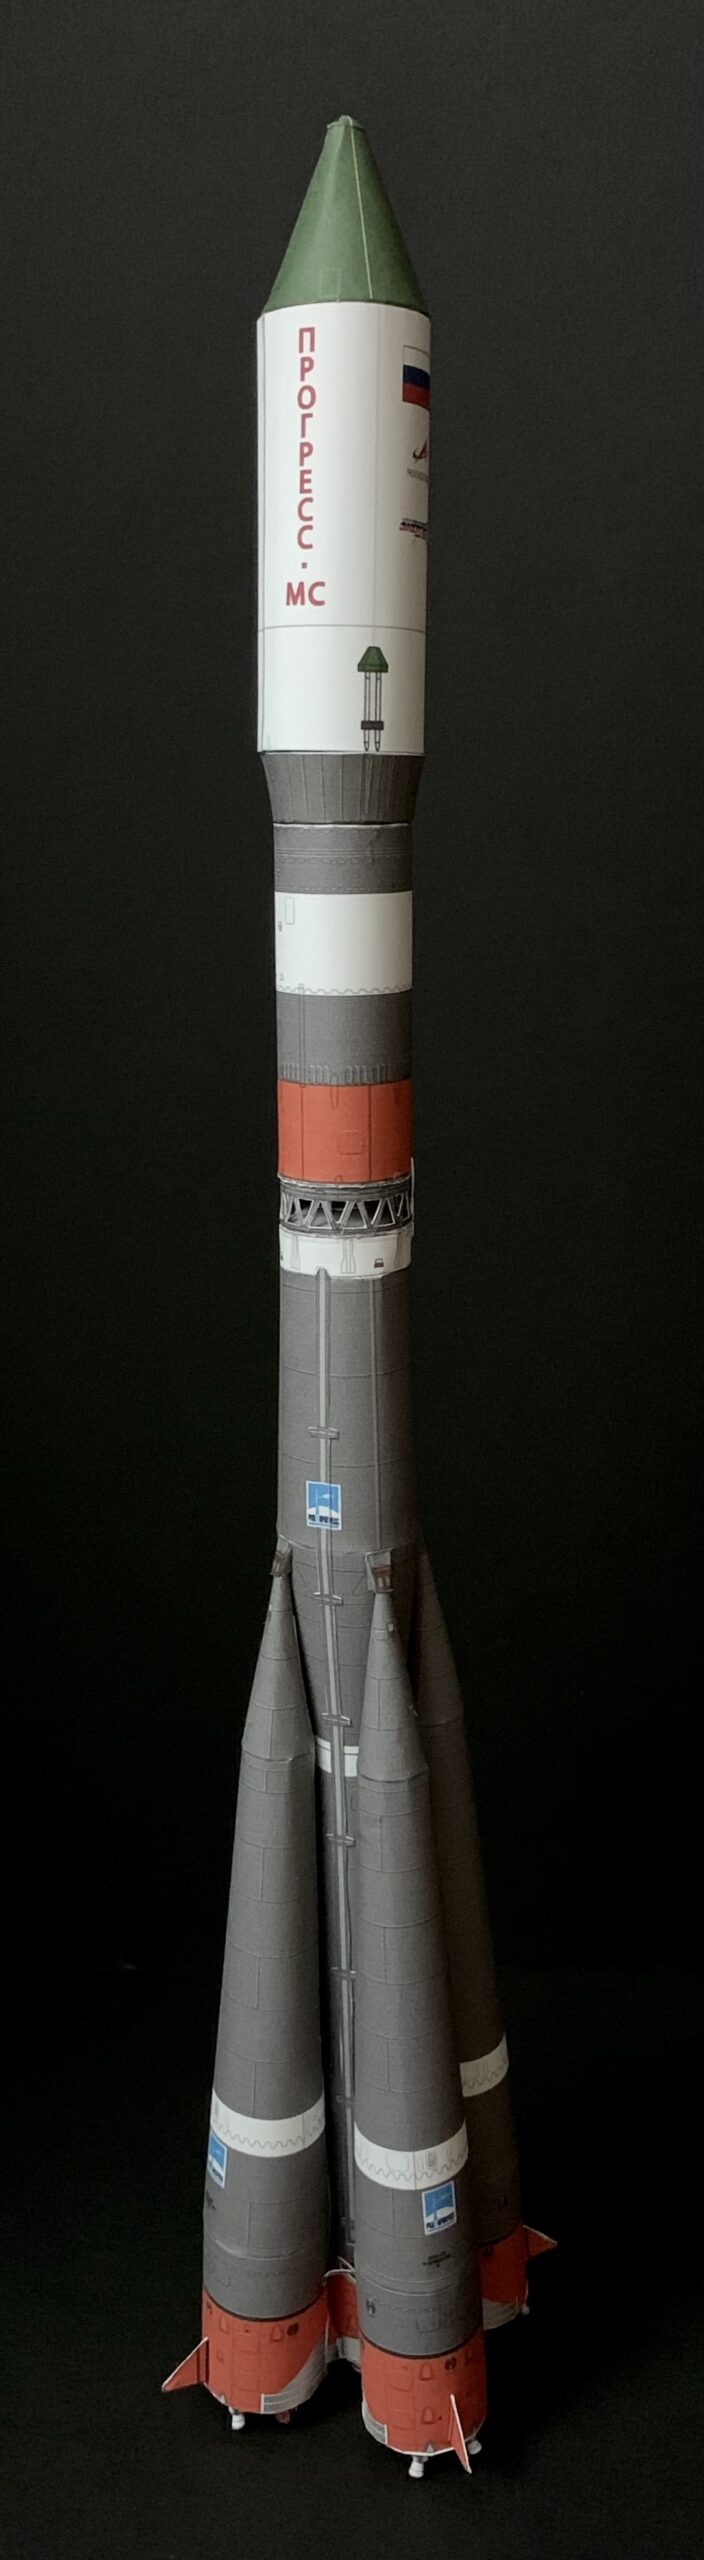 Soyuz 2.1a Progress-MS-image